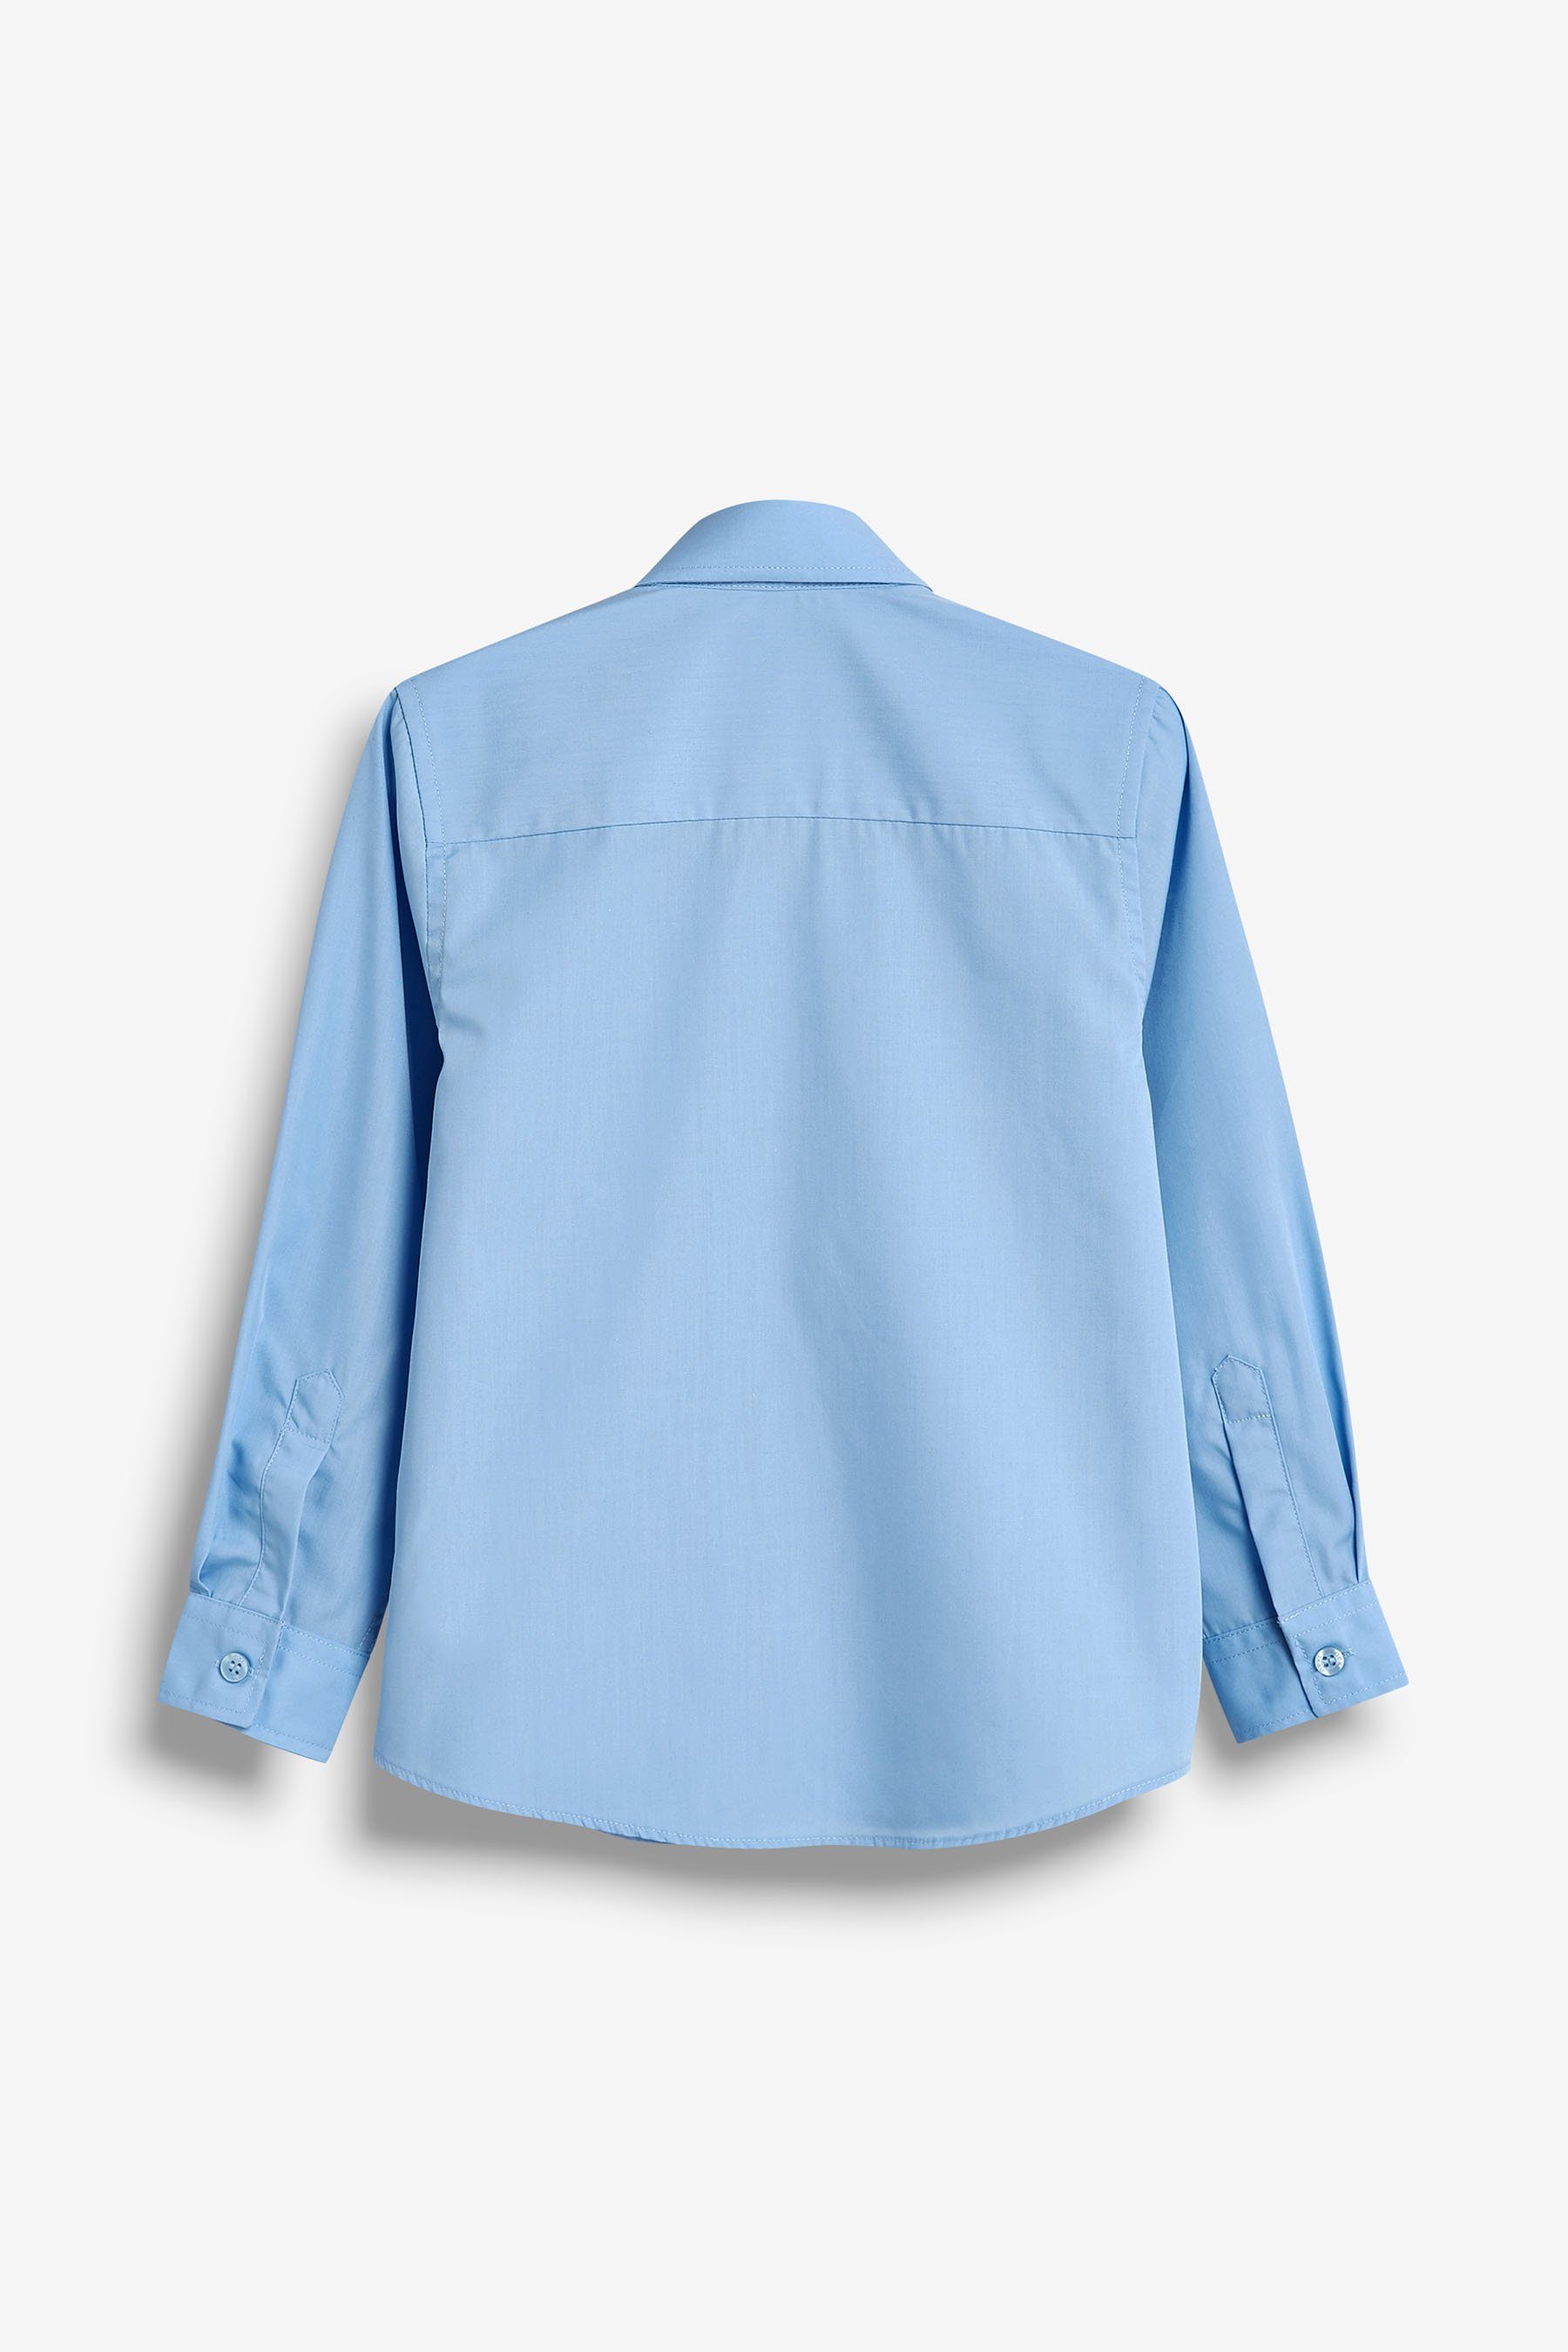 Next Langarmhemd Langarmhemden (3-17 Jahre), 2er-Pack (2-tlg) Standard, Blue